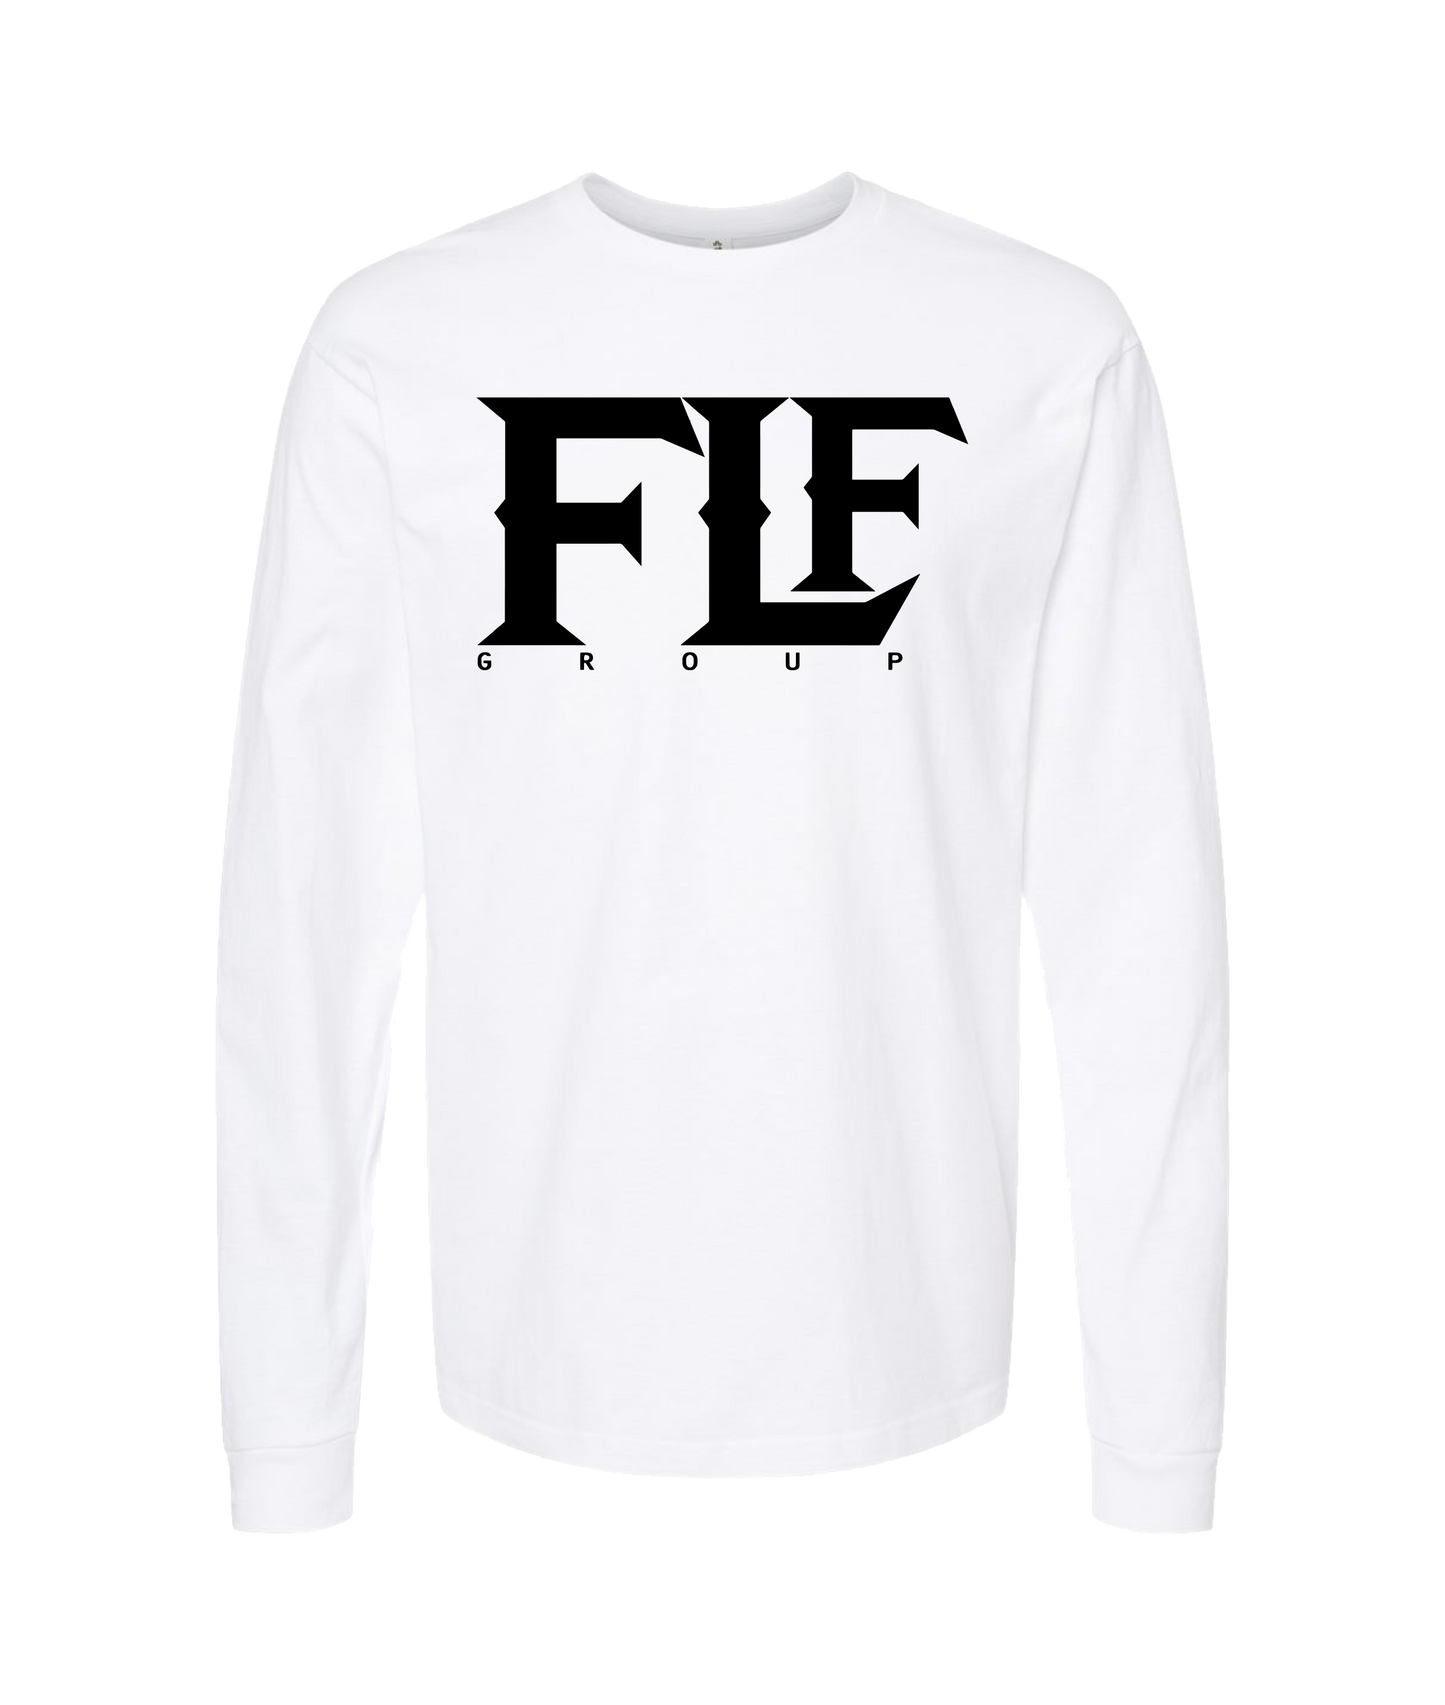 Armani_OD - FLF Group Logo - White Long Sleeve T